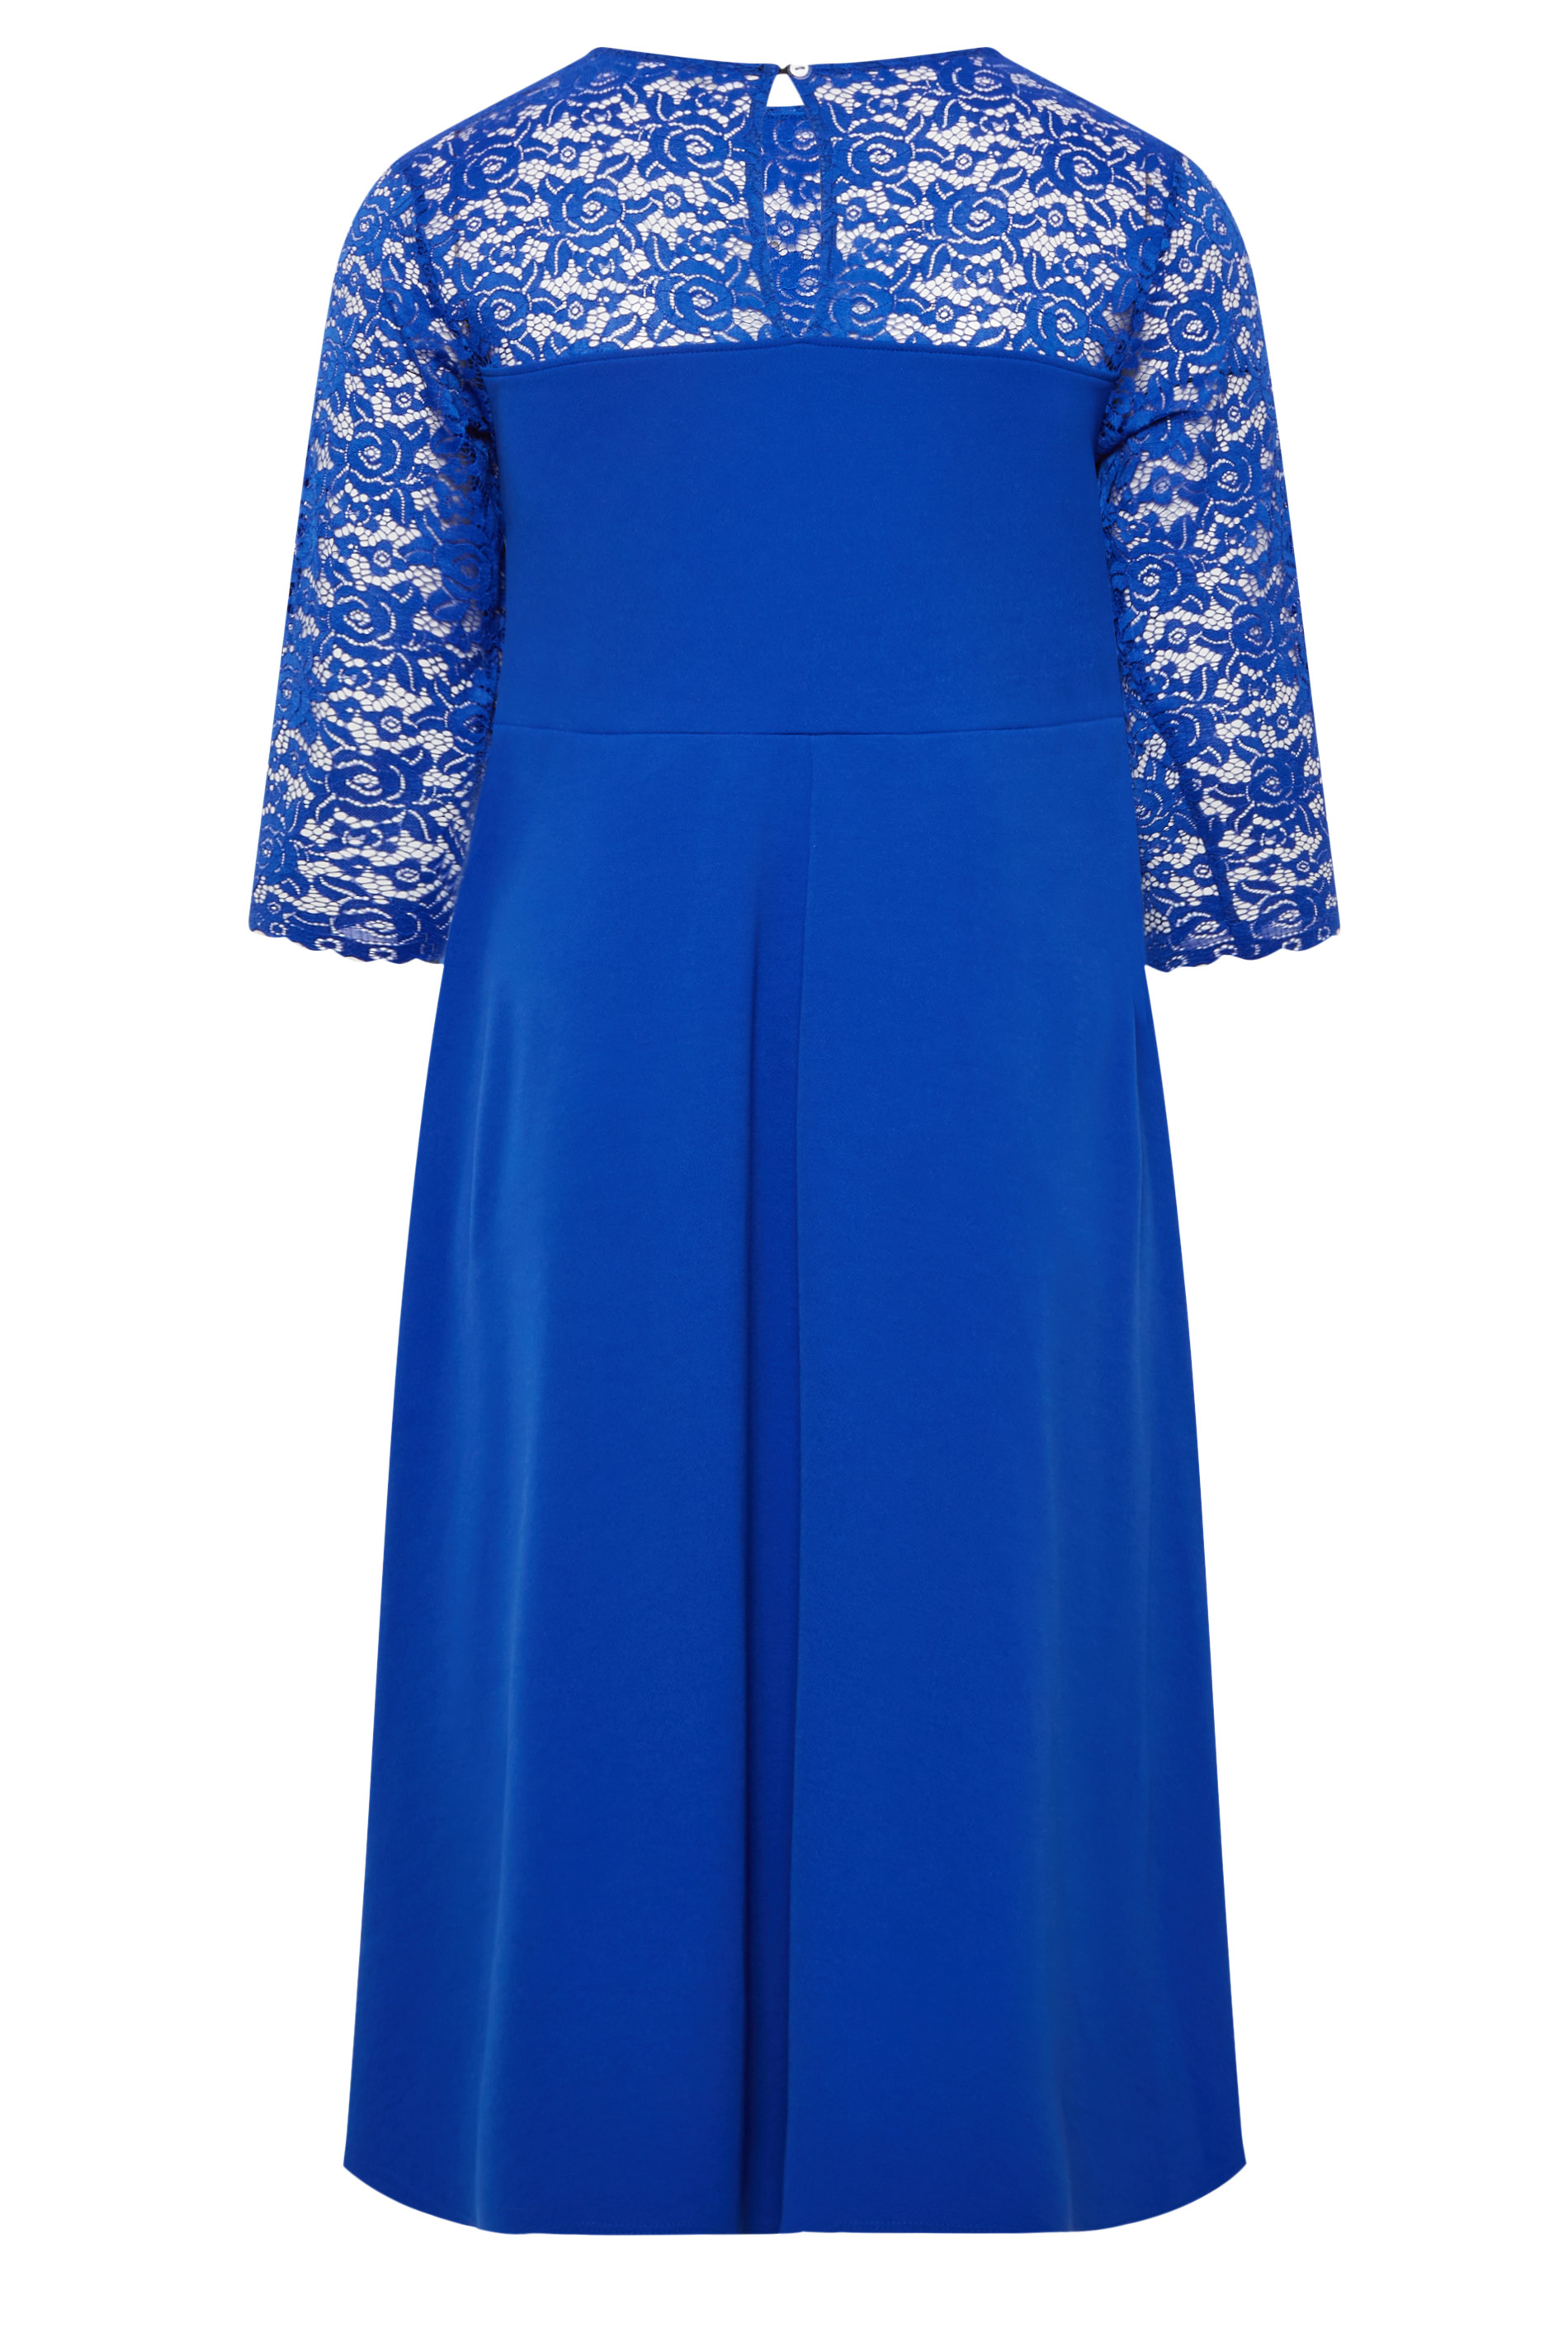 YOURS LONDON Plus Size Curve Royal Blue Lace Sweetheart Midi Dress ...